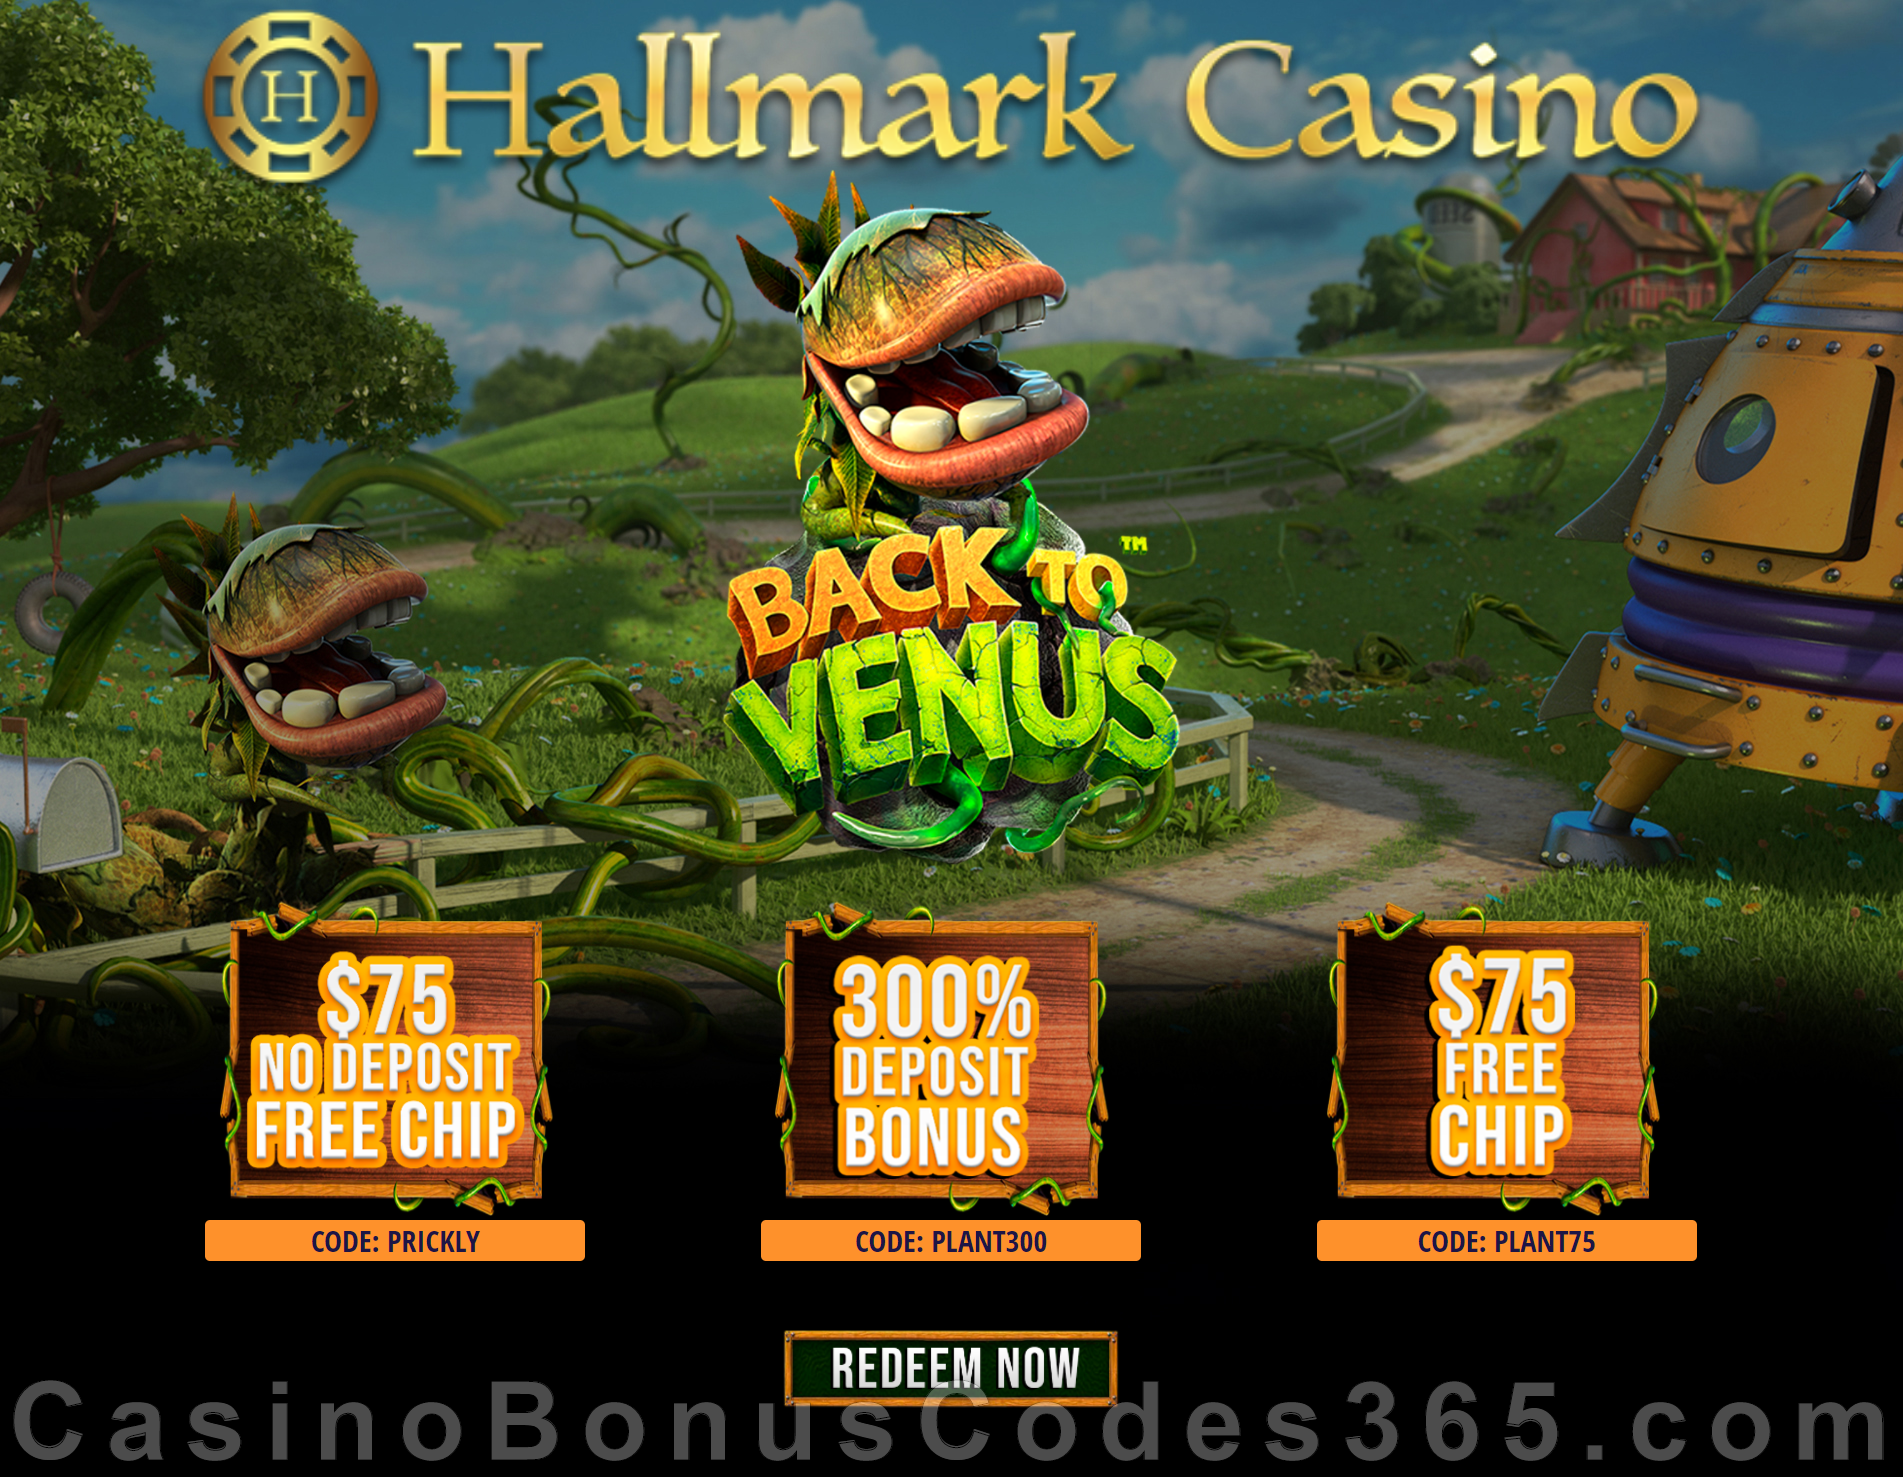 No Deposit Bonus Codes For Hallmark Casino Online